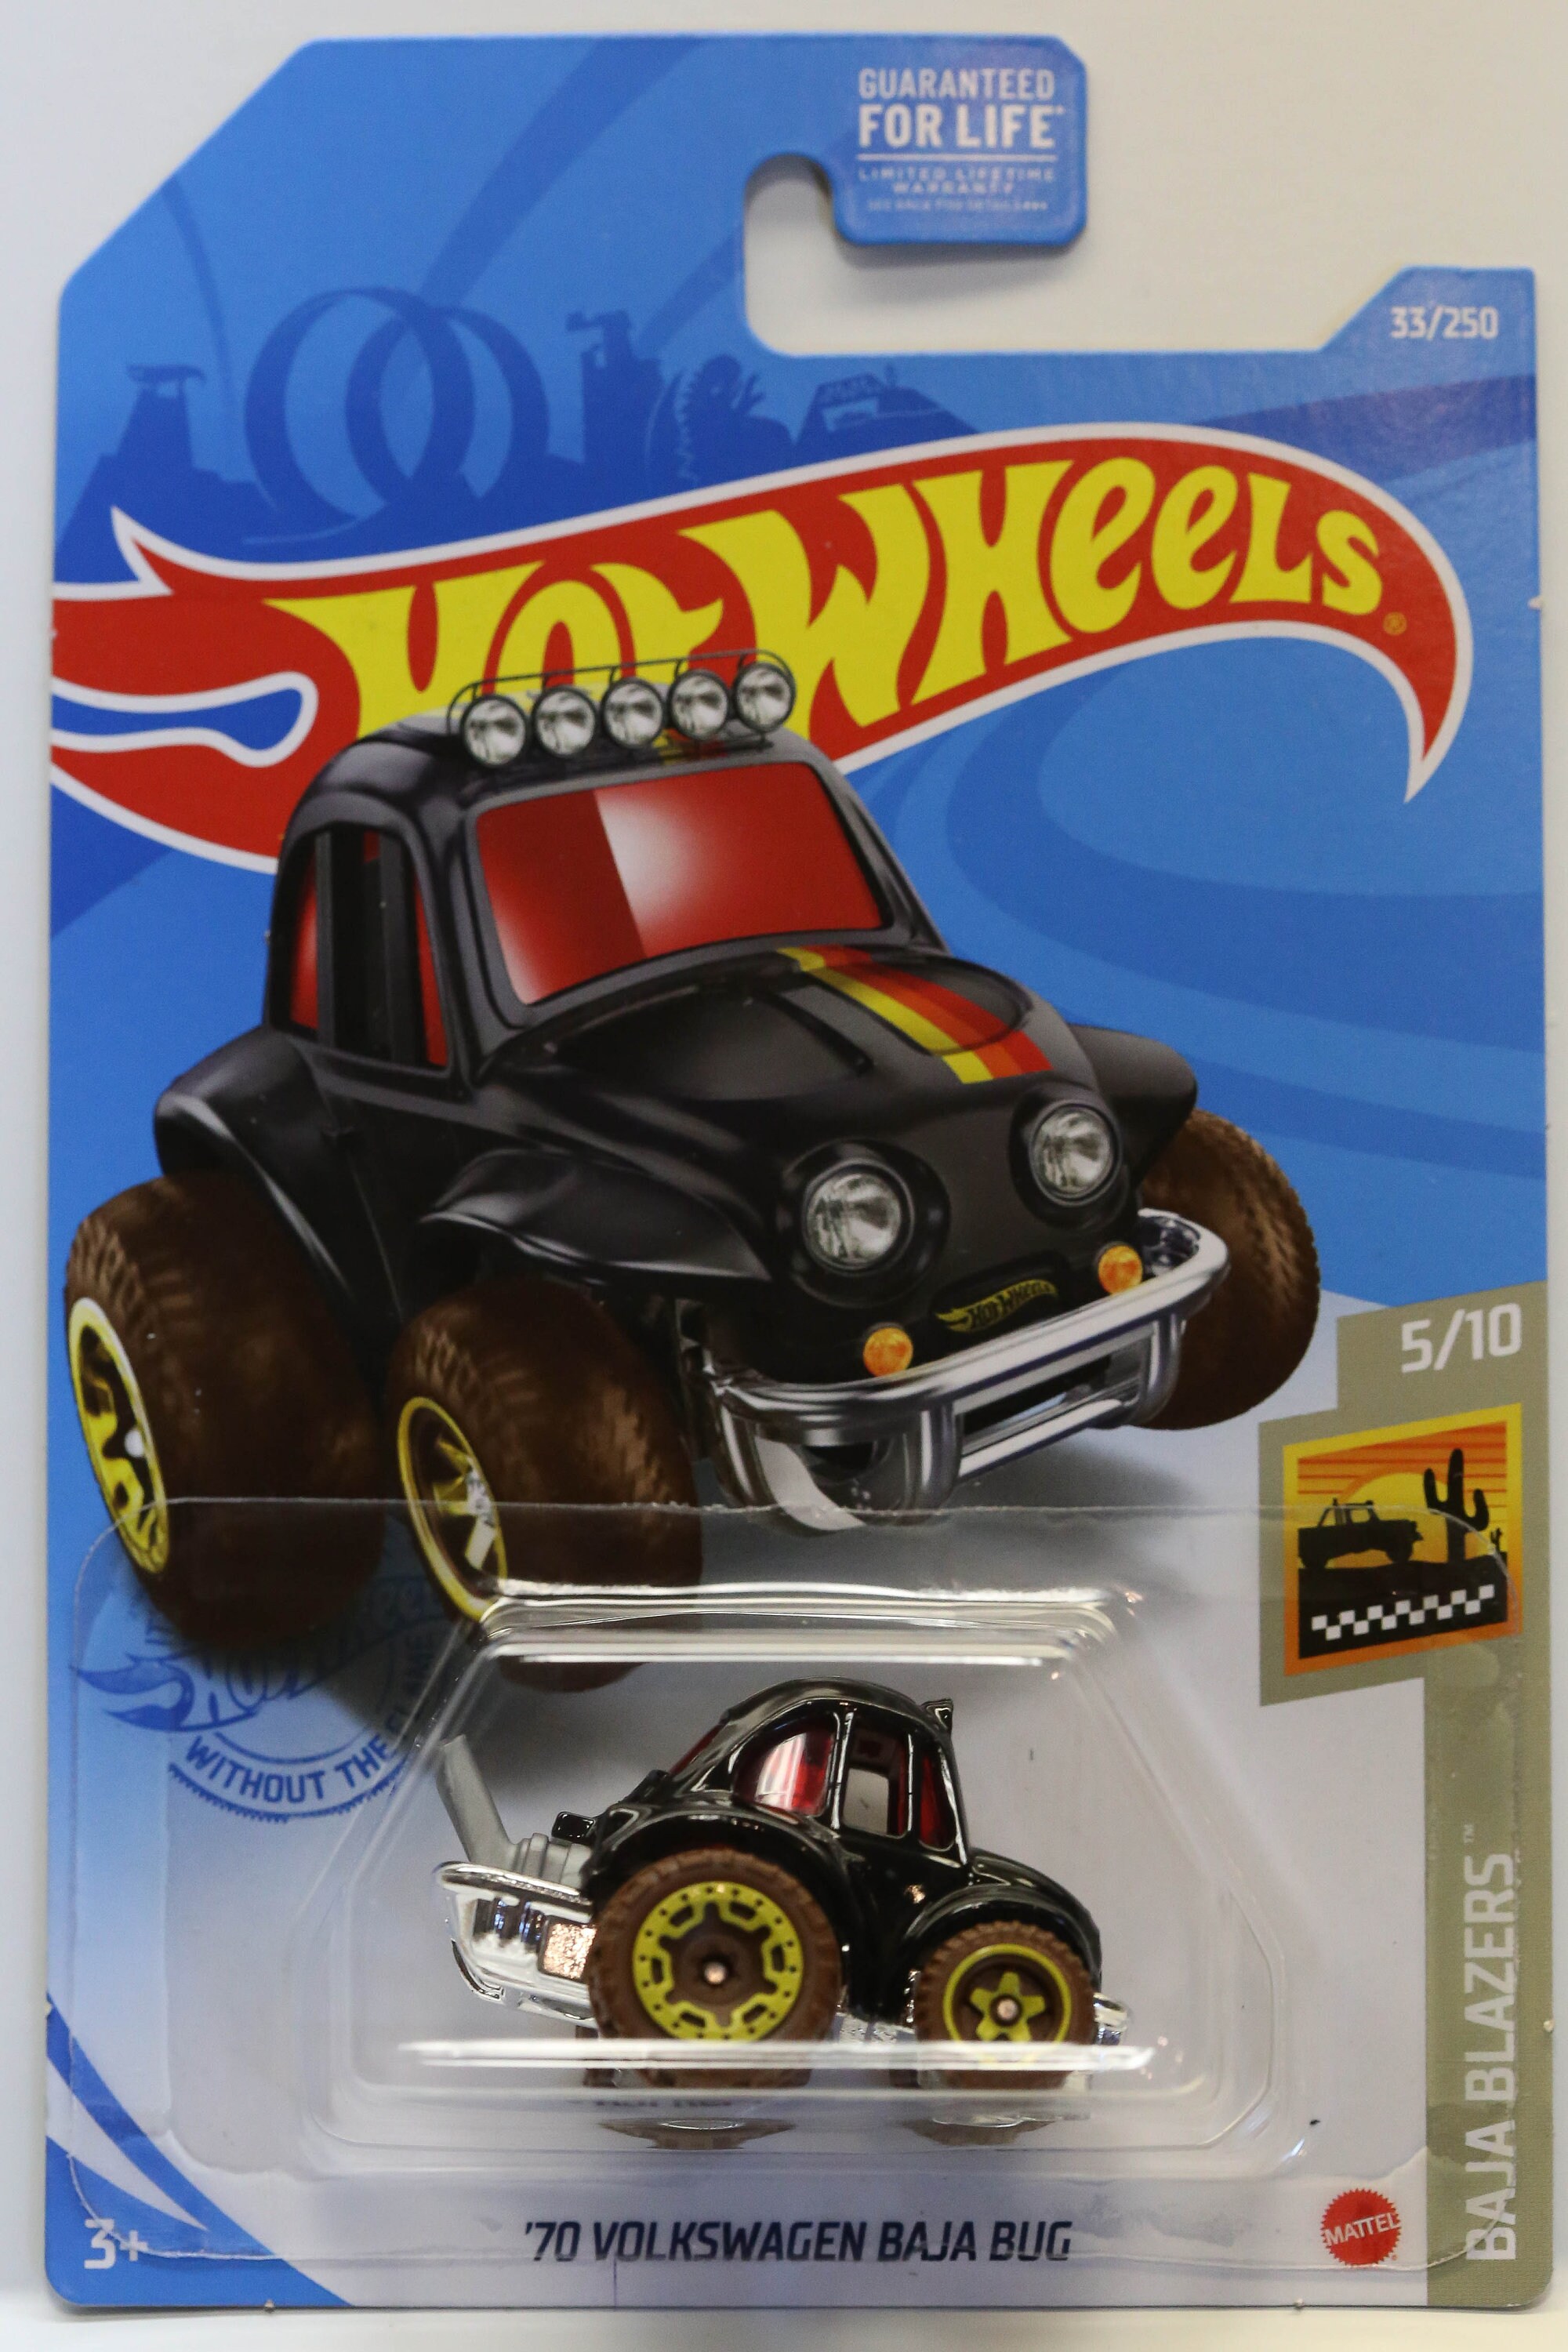 70 Volkswagen Baja Bug New Collectable Toy Model Car. Hot Wheels 2020 